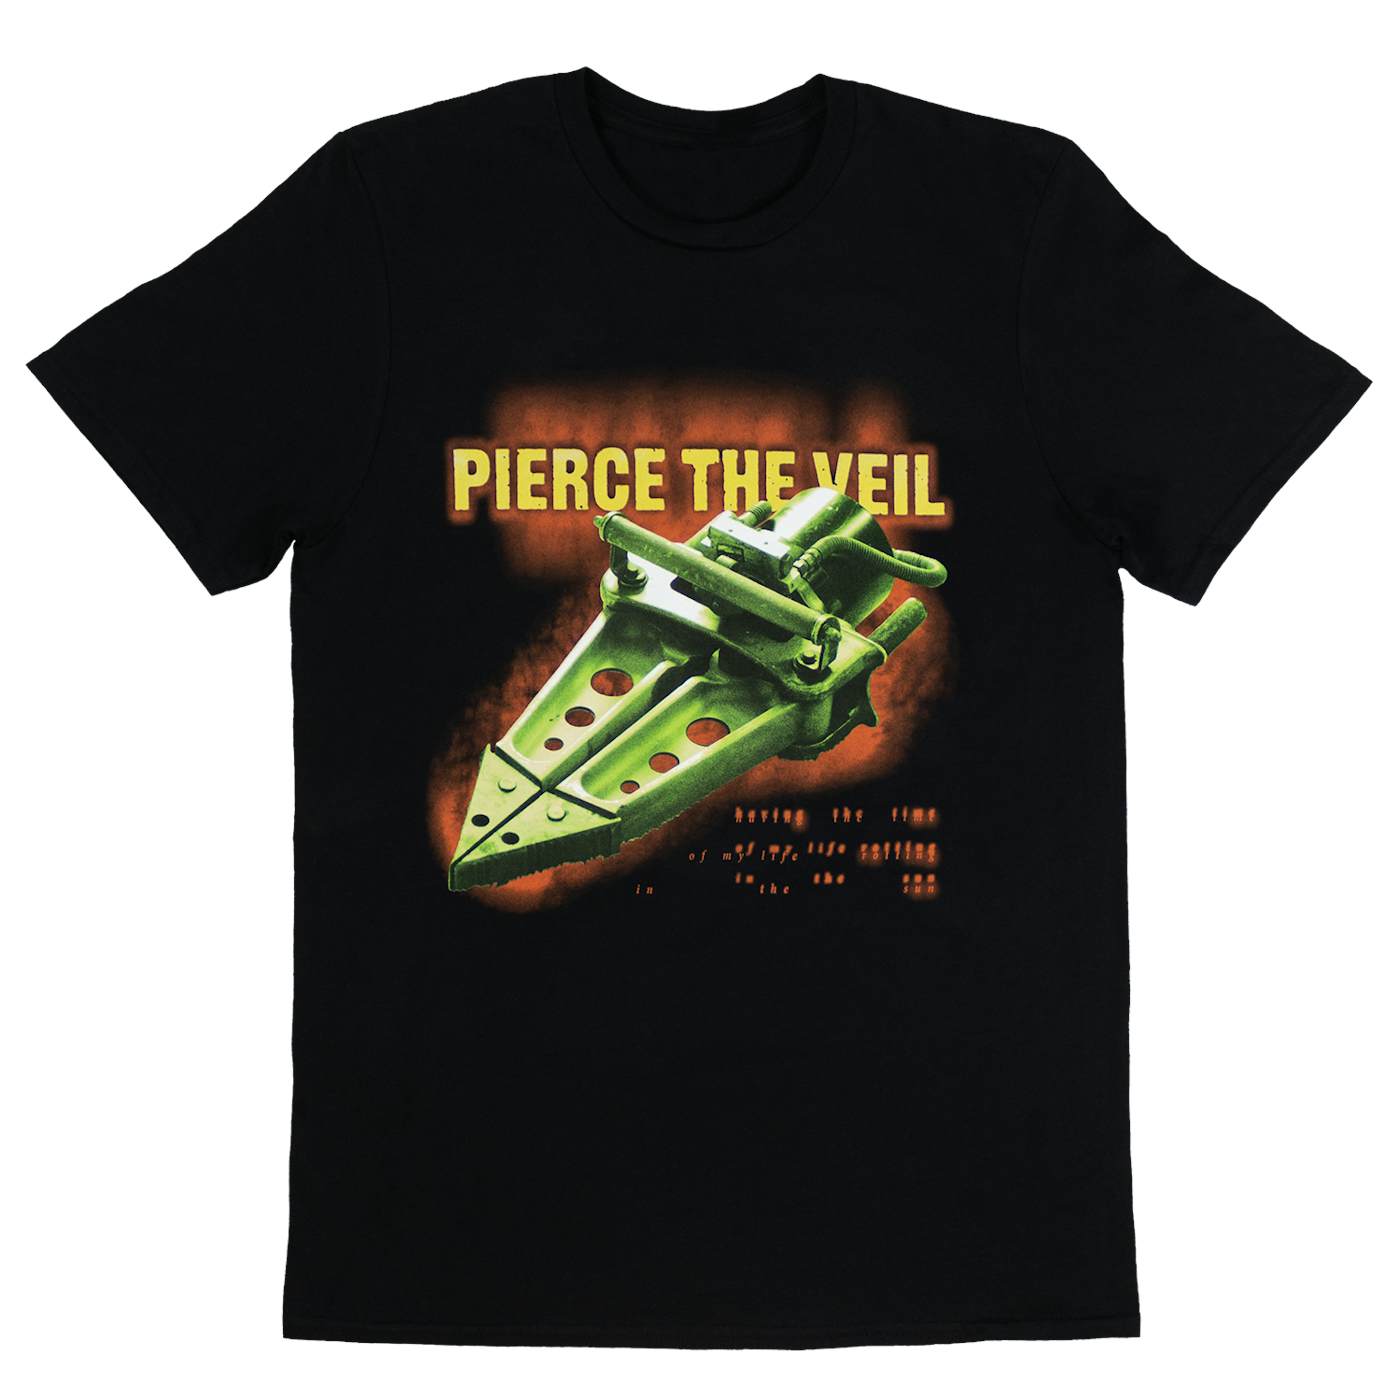 Pierce The Veil "Jaws Cover" T-Shirt